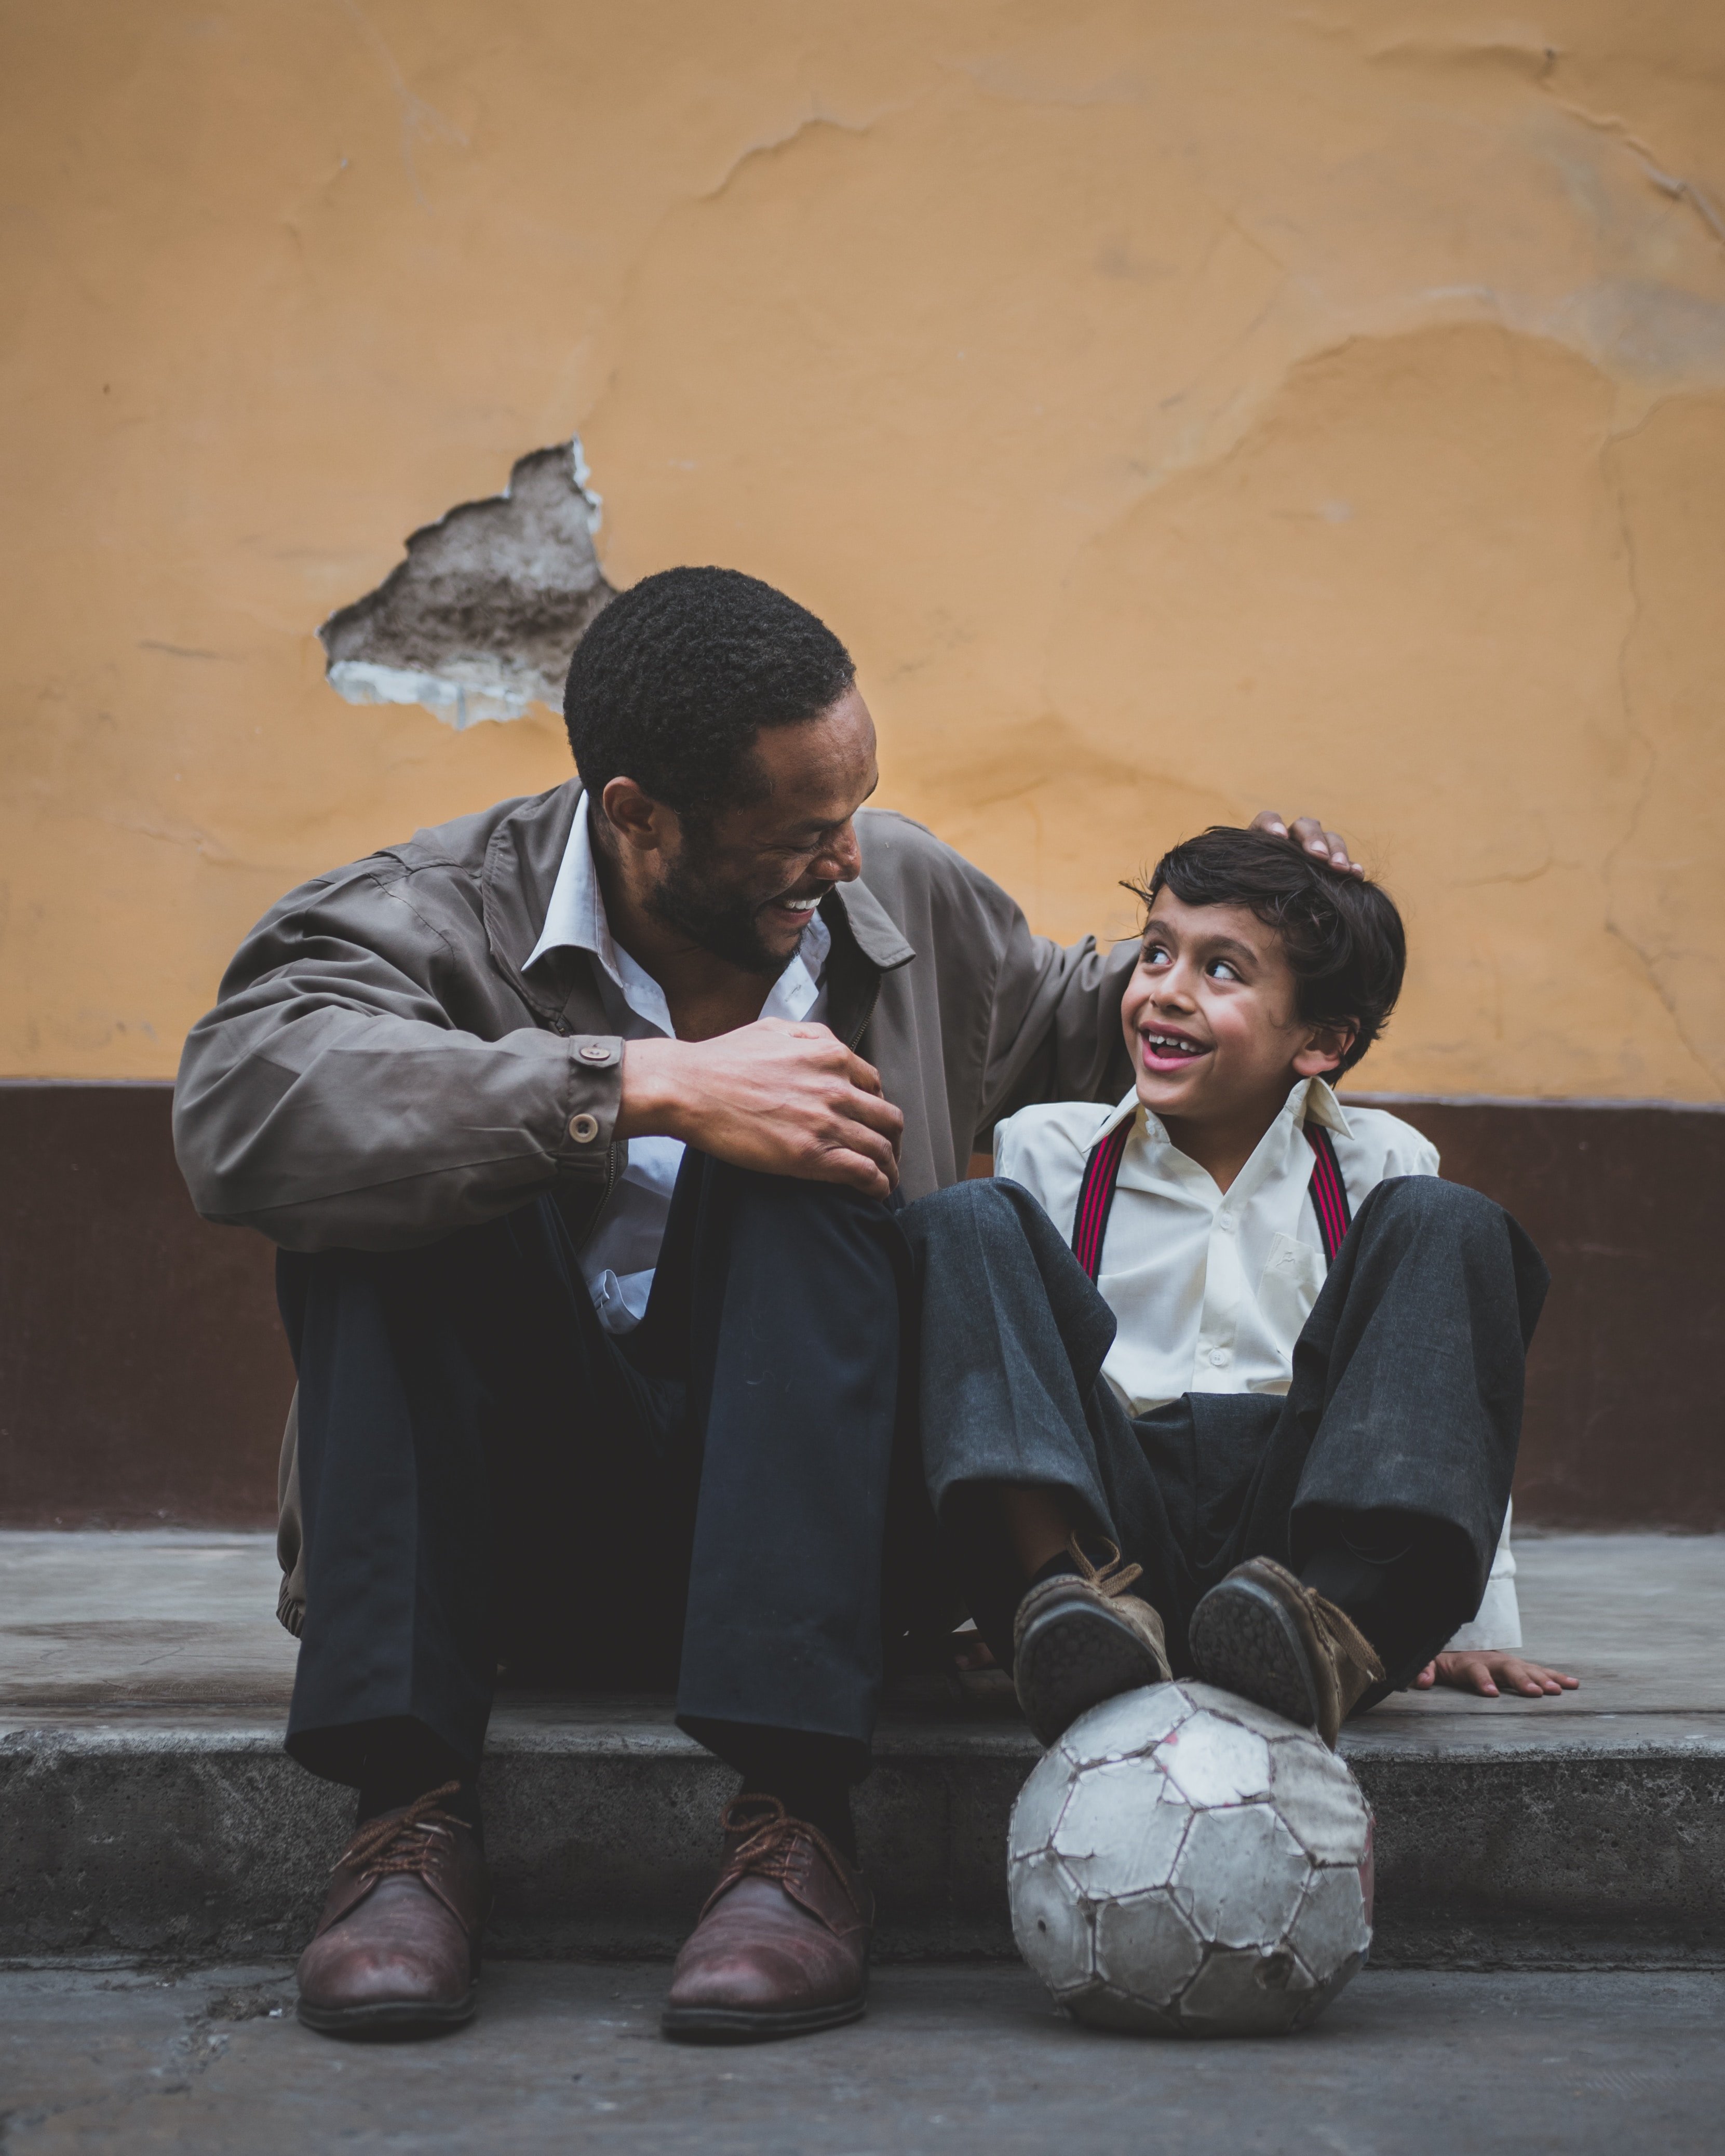 Father and son smiling at each other. | Source: Upsplash/Sebastián León Prado